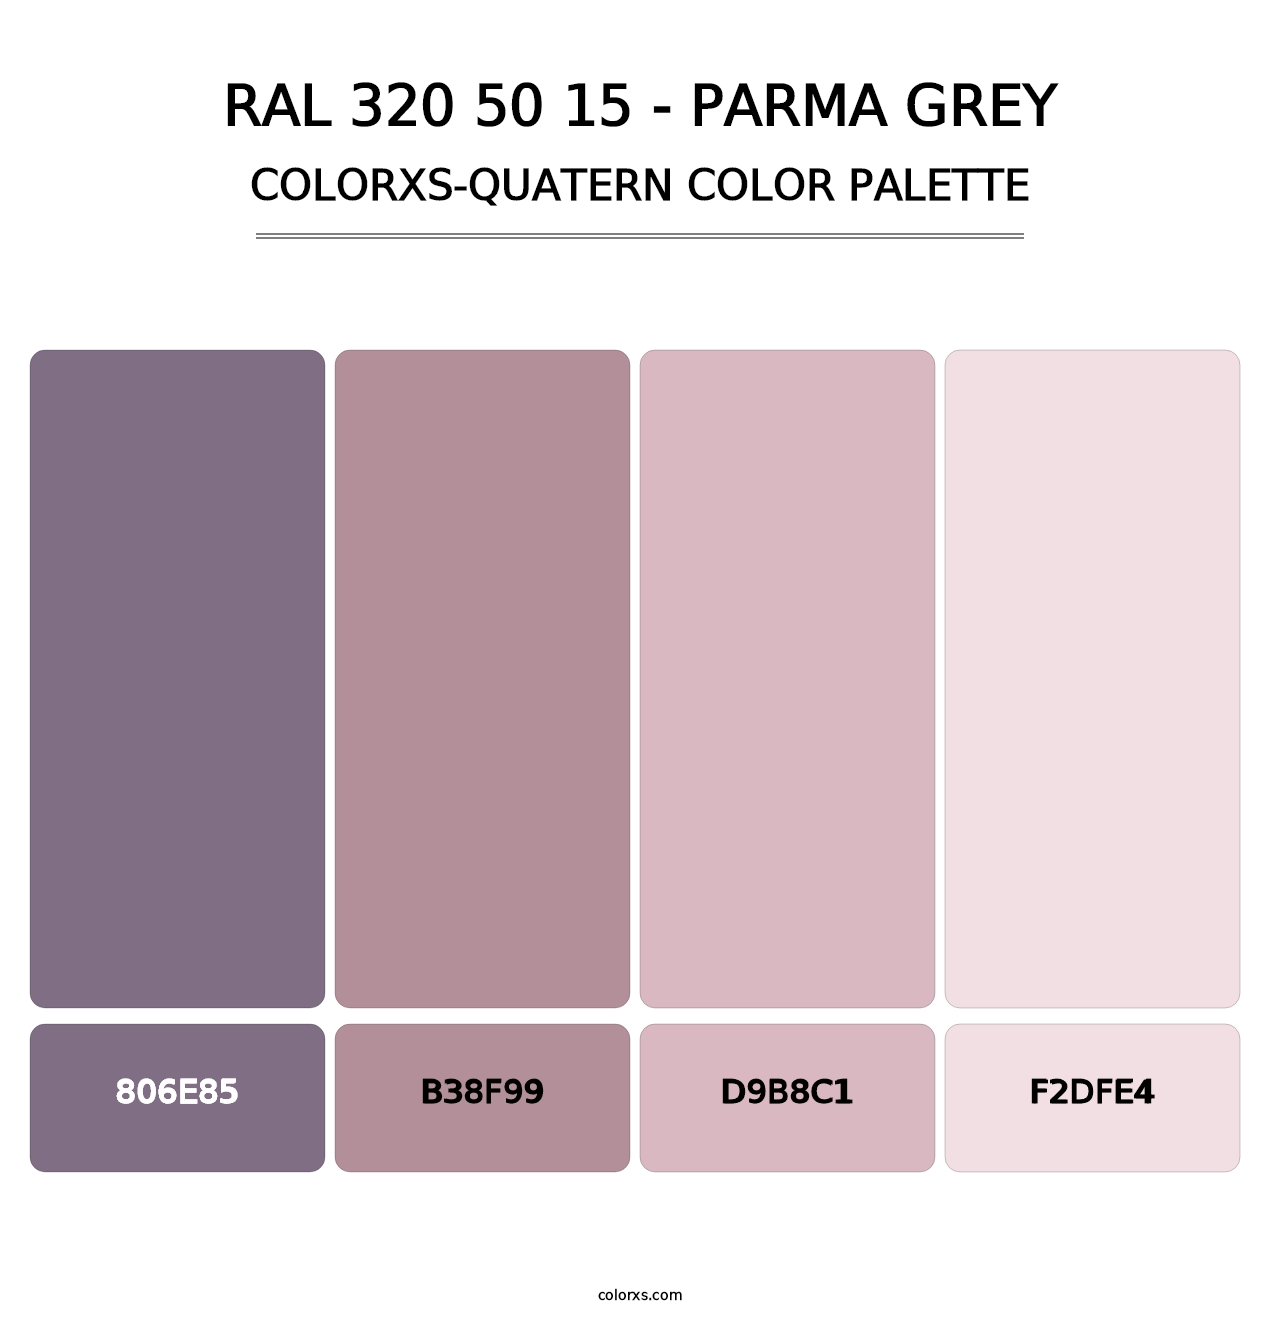 RAL 320 50 15 - Parma Grey - Colorxs Quatern Palette